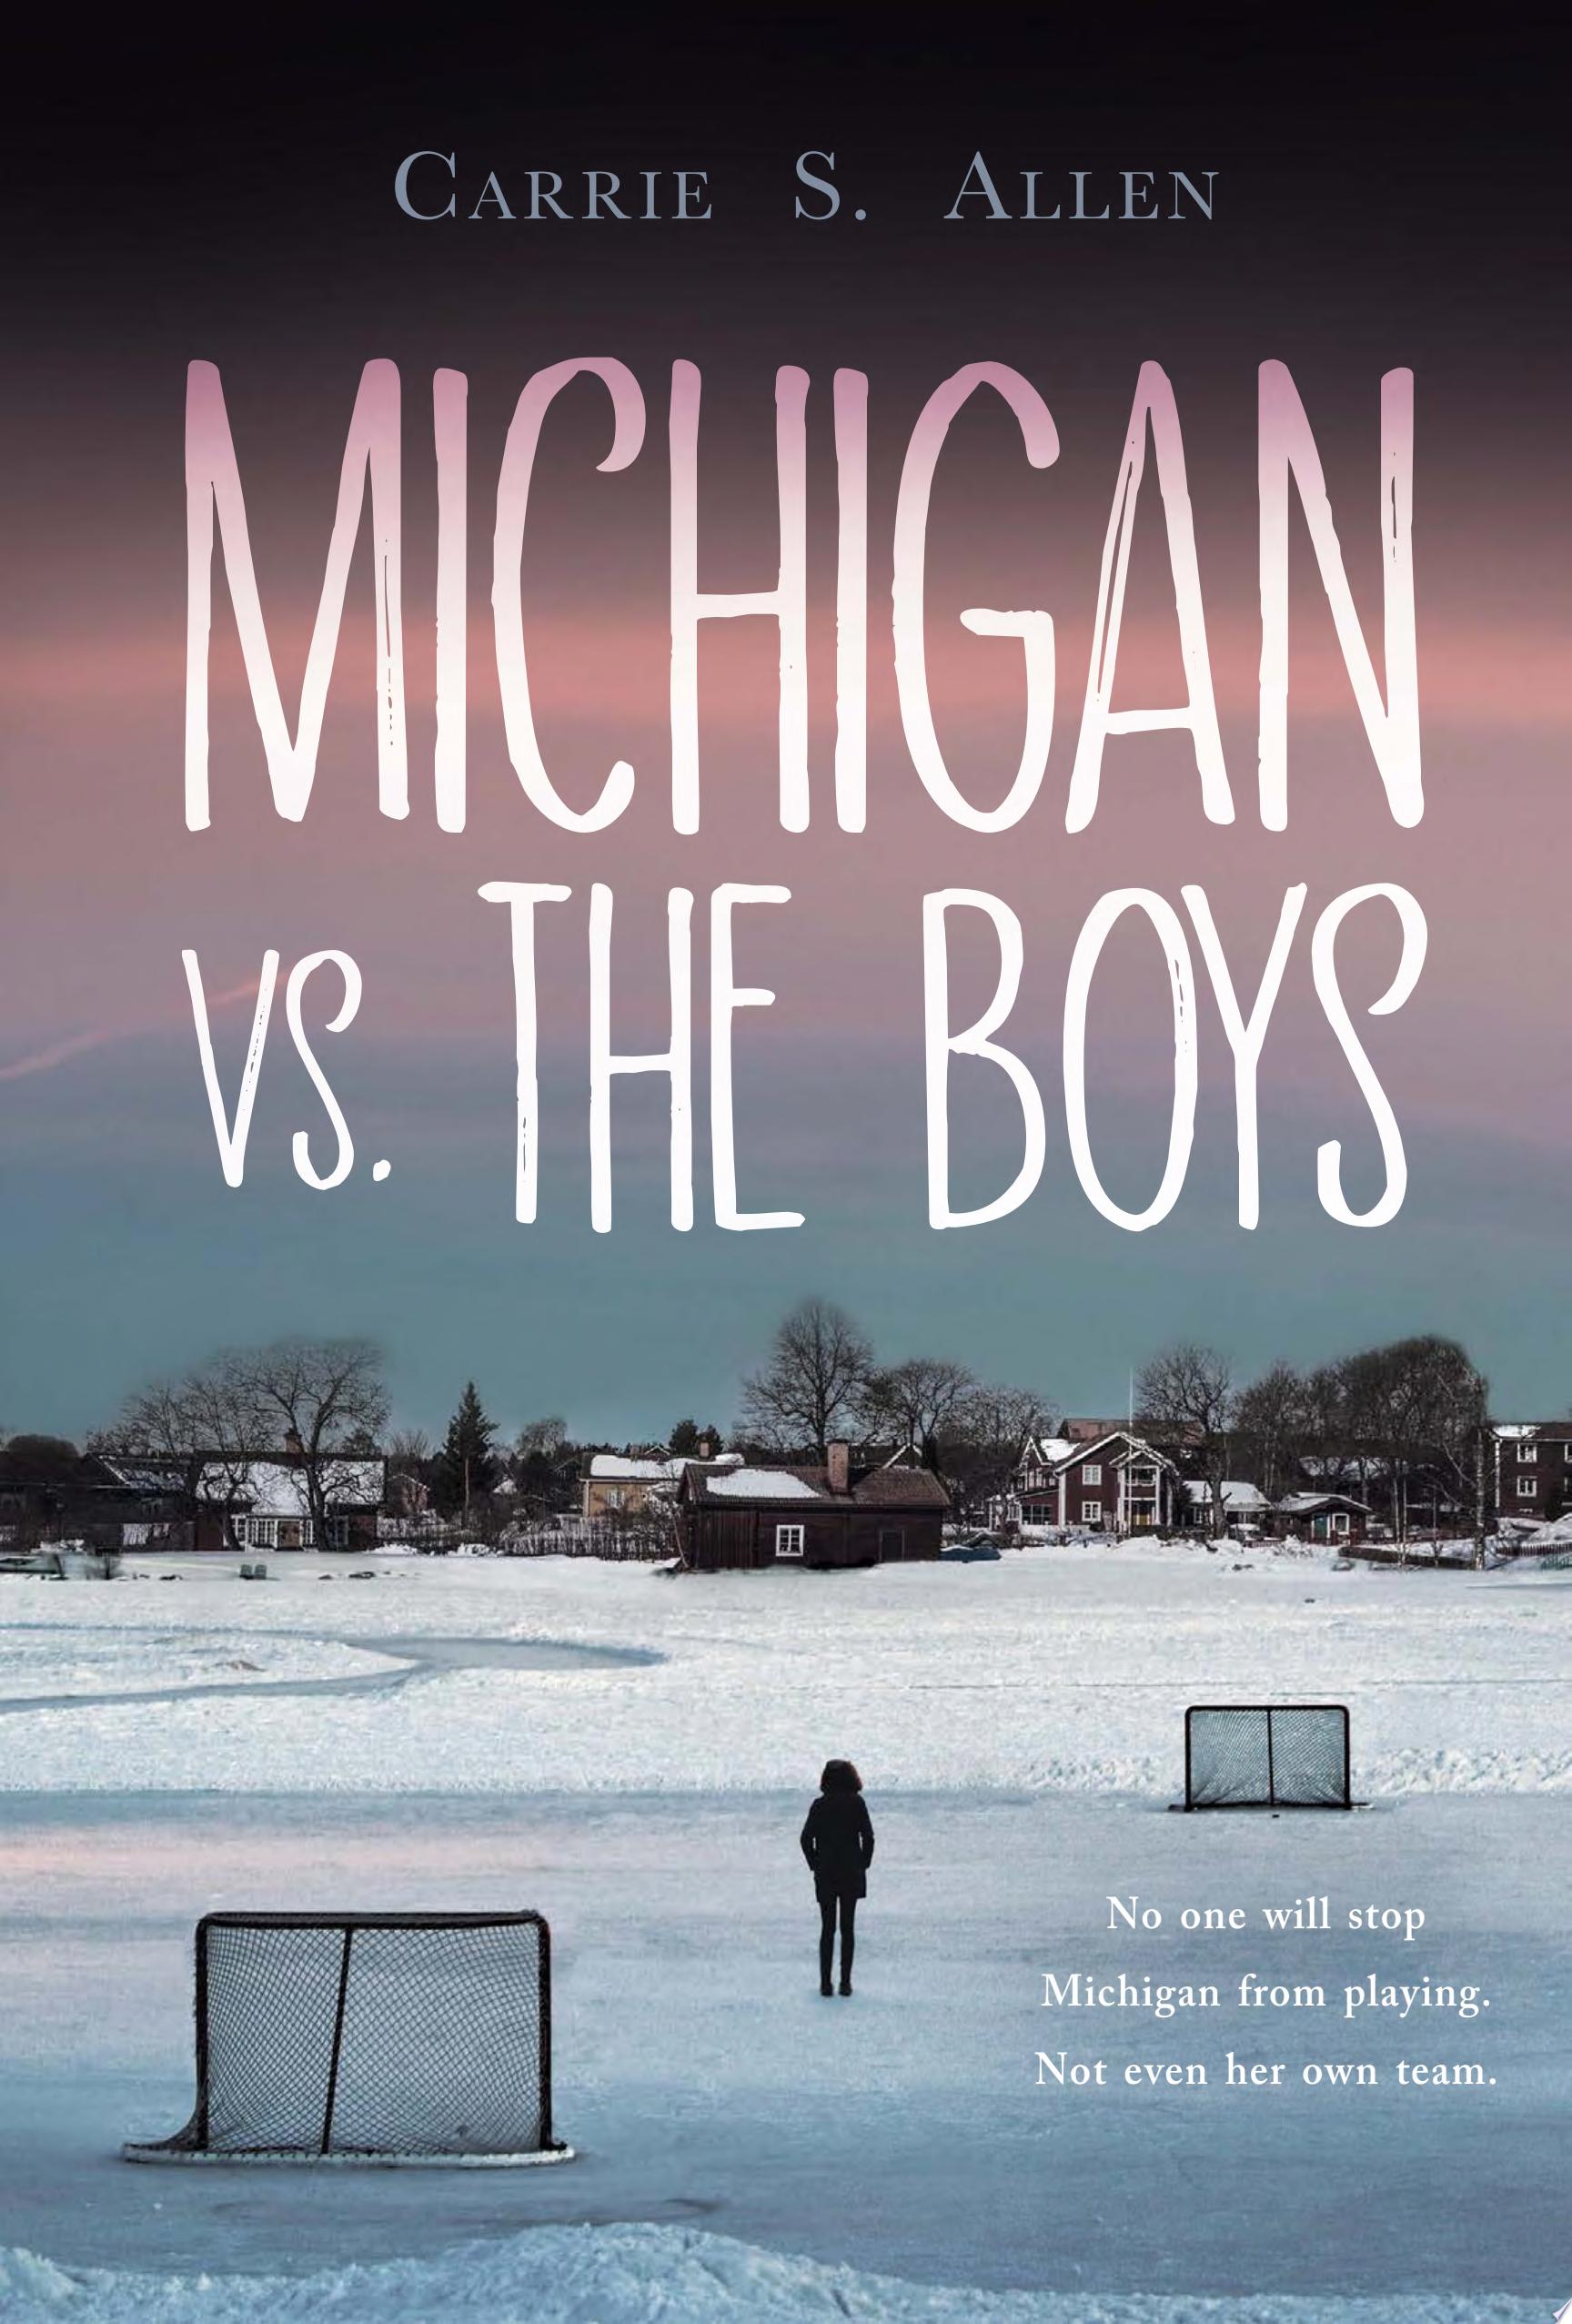 Image for "Michigan vs. the Boys"